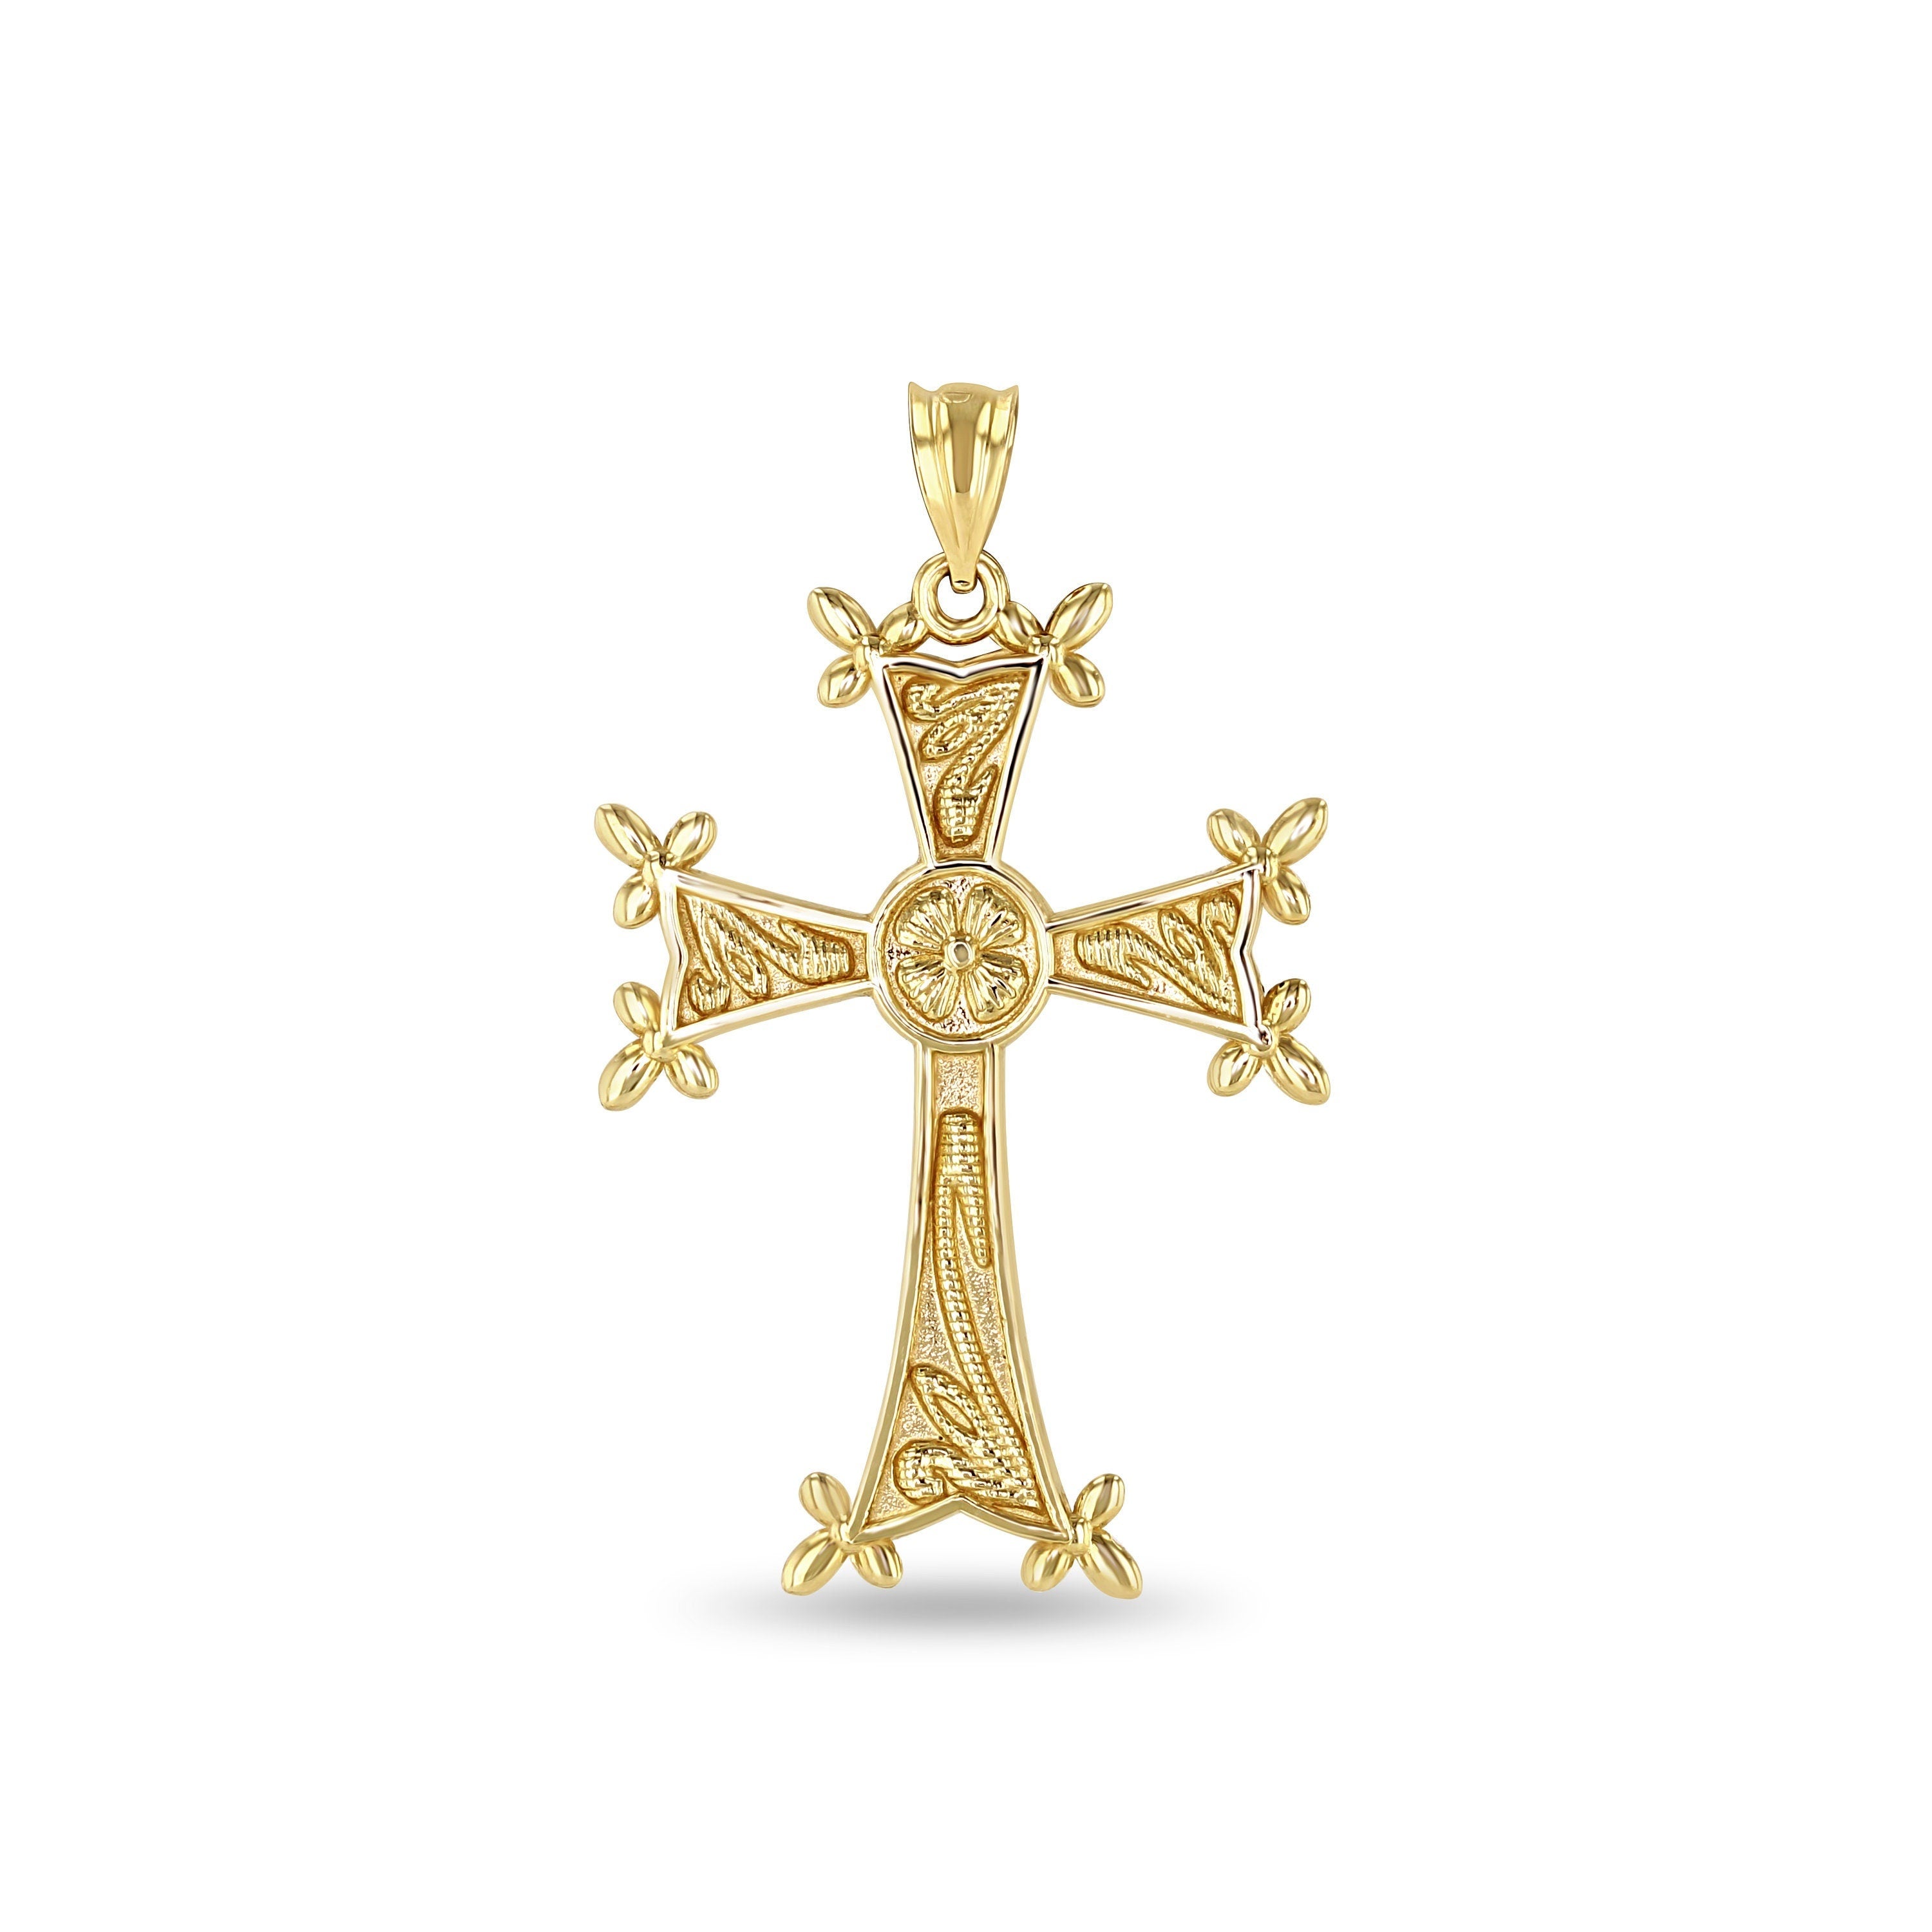 14kt Gold High Polish Cross Pendant